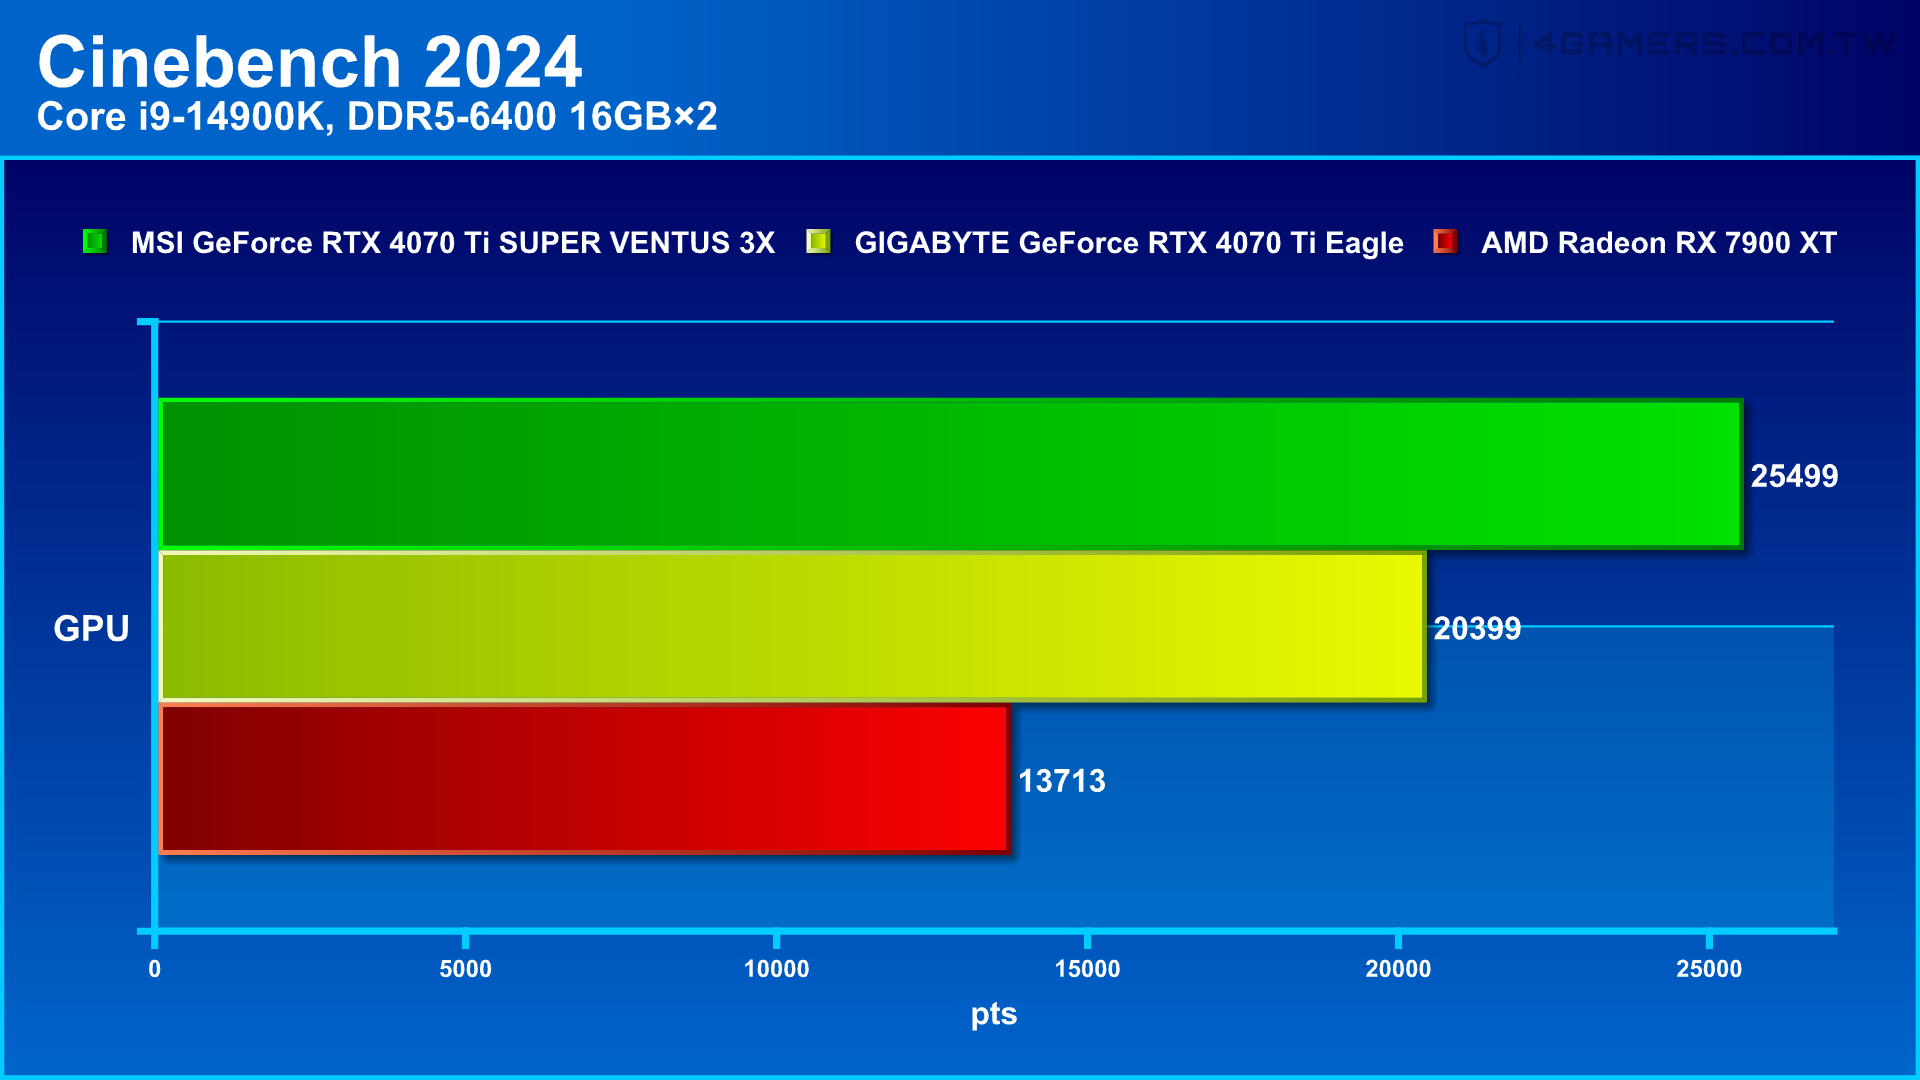 MSI GeForce RTX 4070 Ti SUPER VENTUS 3X